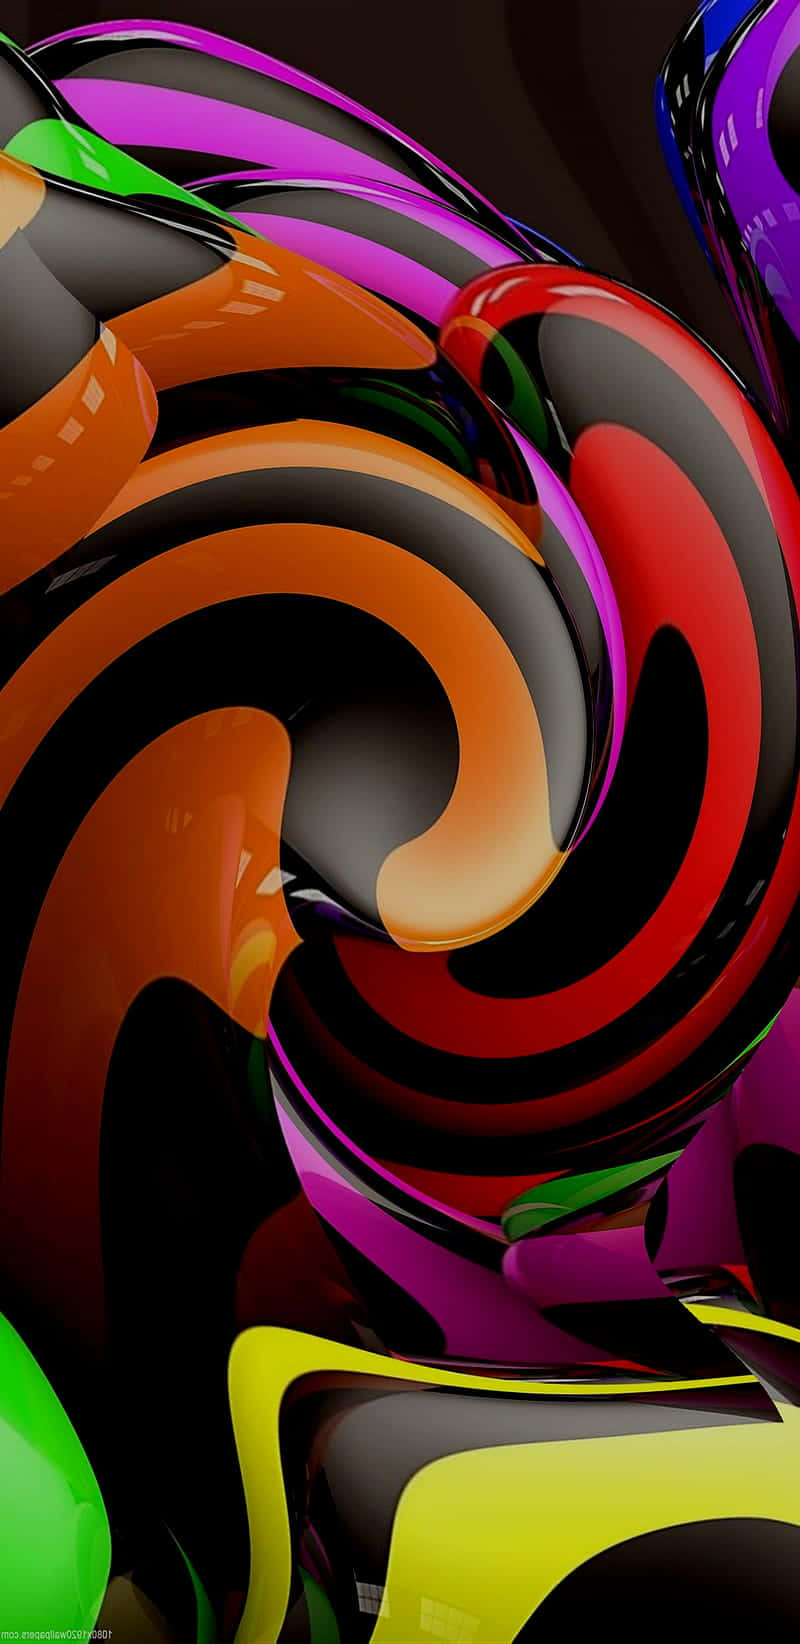 Colorful Swirl Super Amoled Display Wallpaper